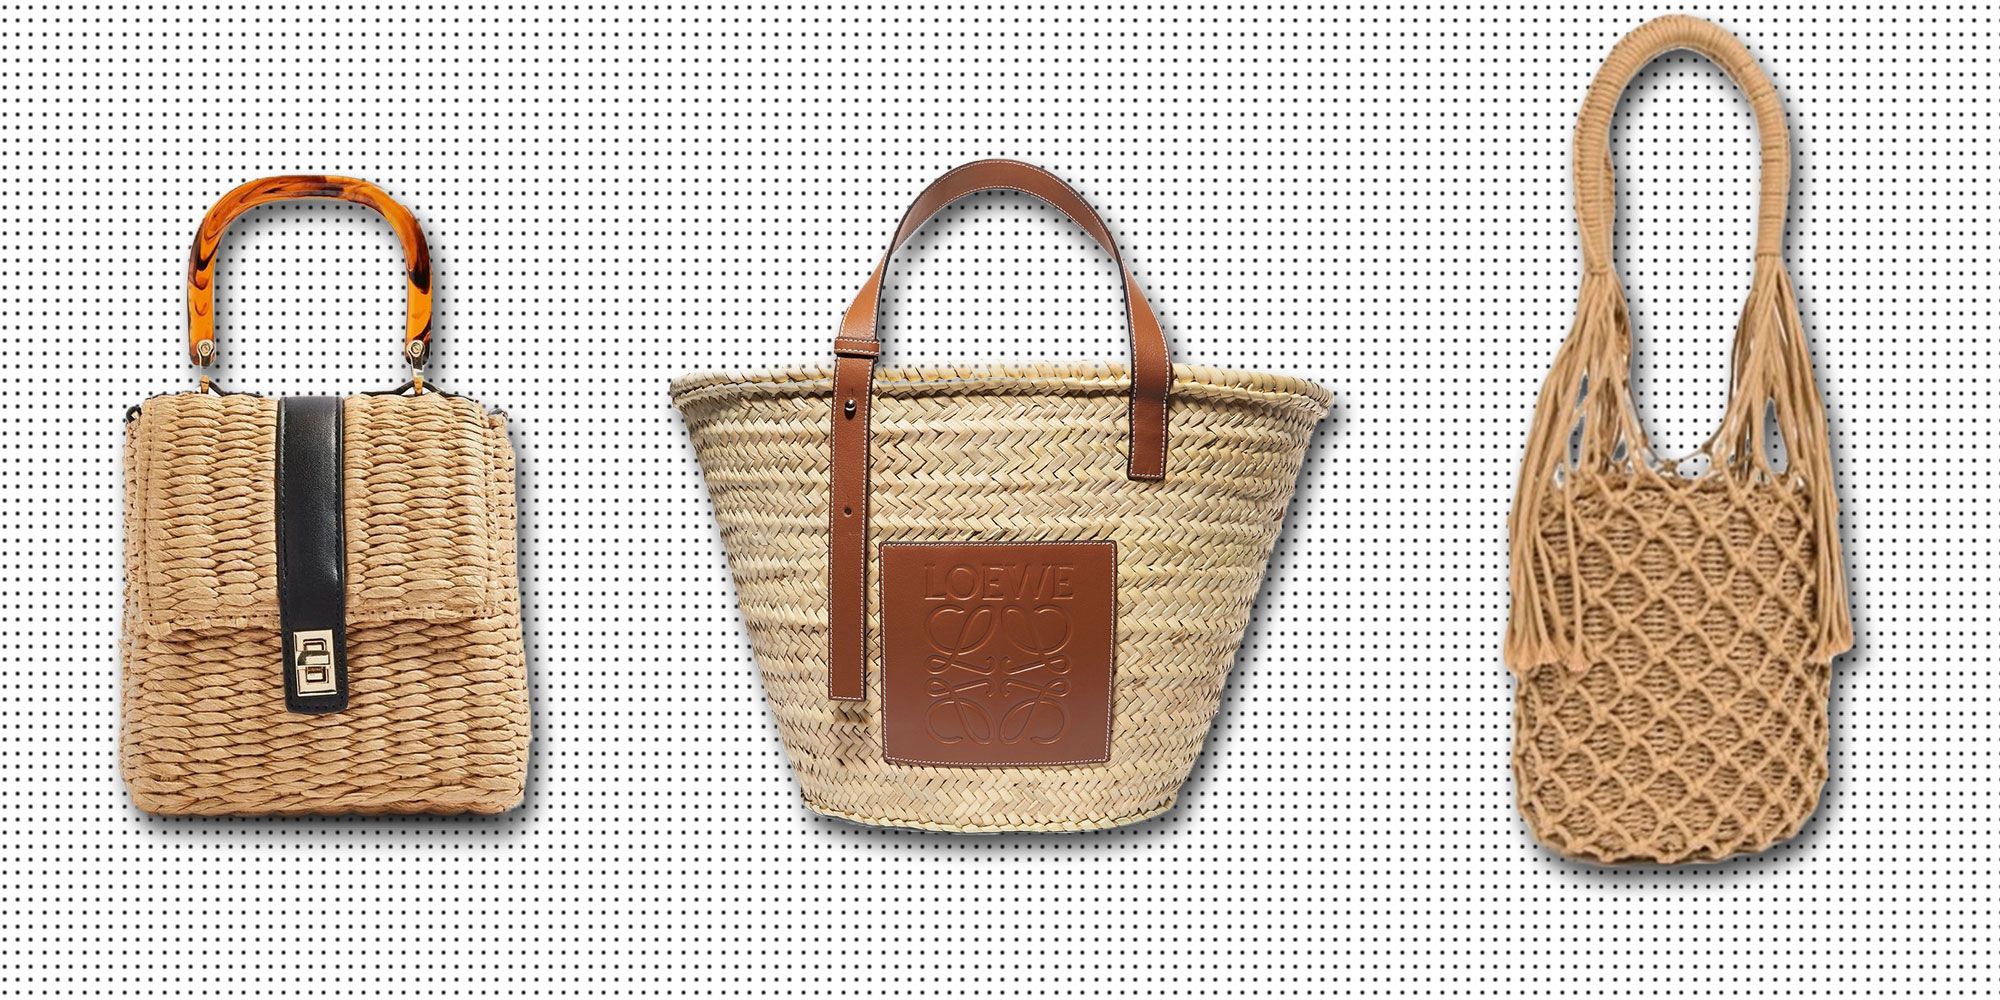 straw tote beach bag